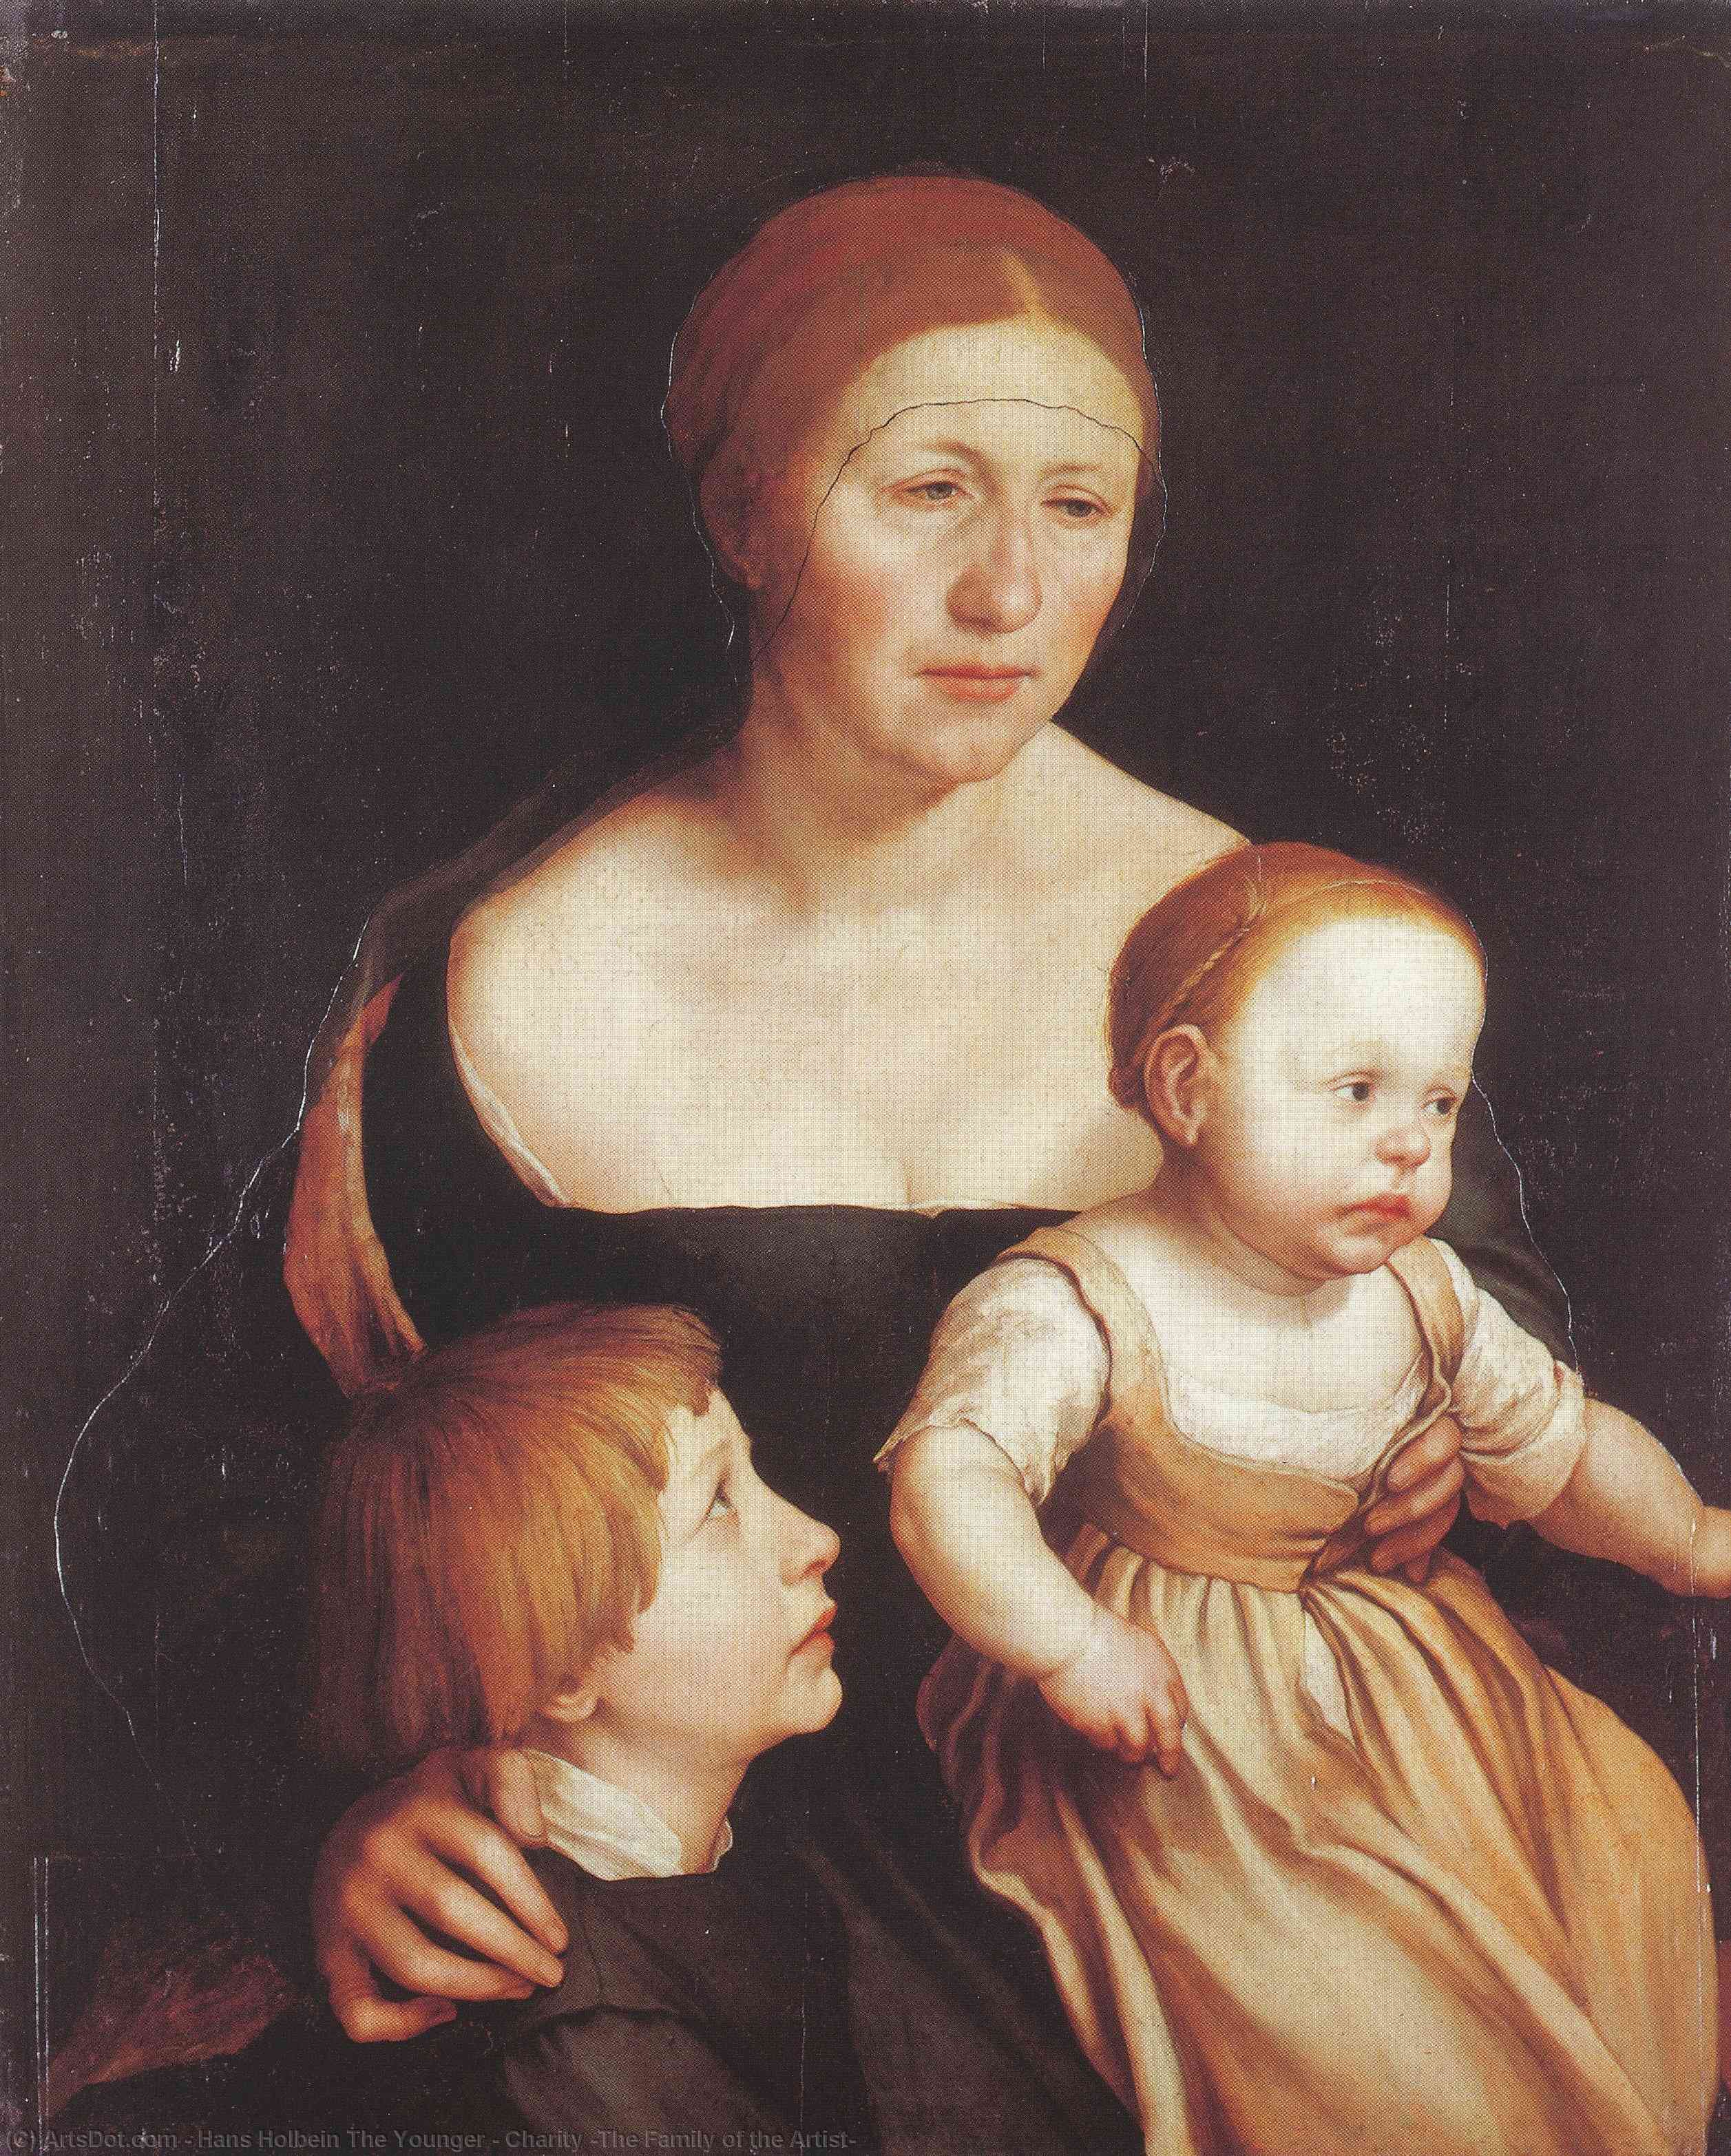 Wikoo.org - موسوعة الفنون الجميلة - اللوحة، العمل الفني Hans Holbein The Younger - Charity (The Family of the Artist)